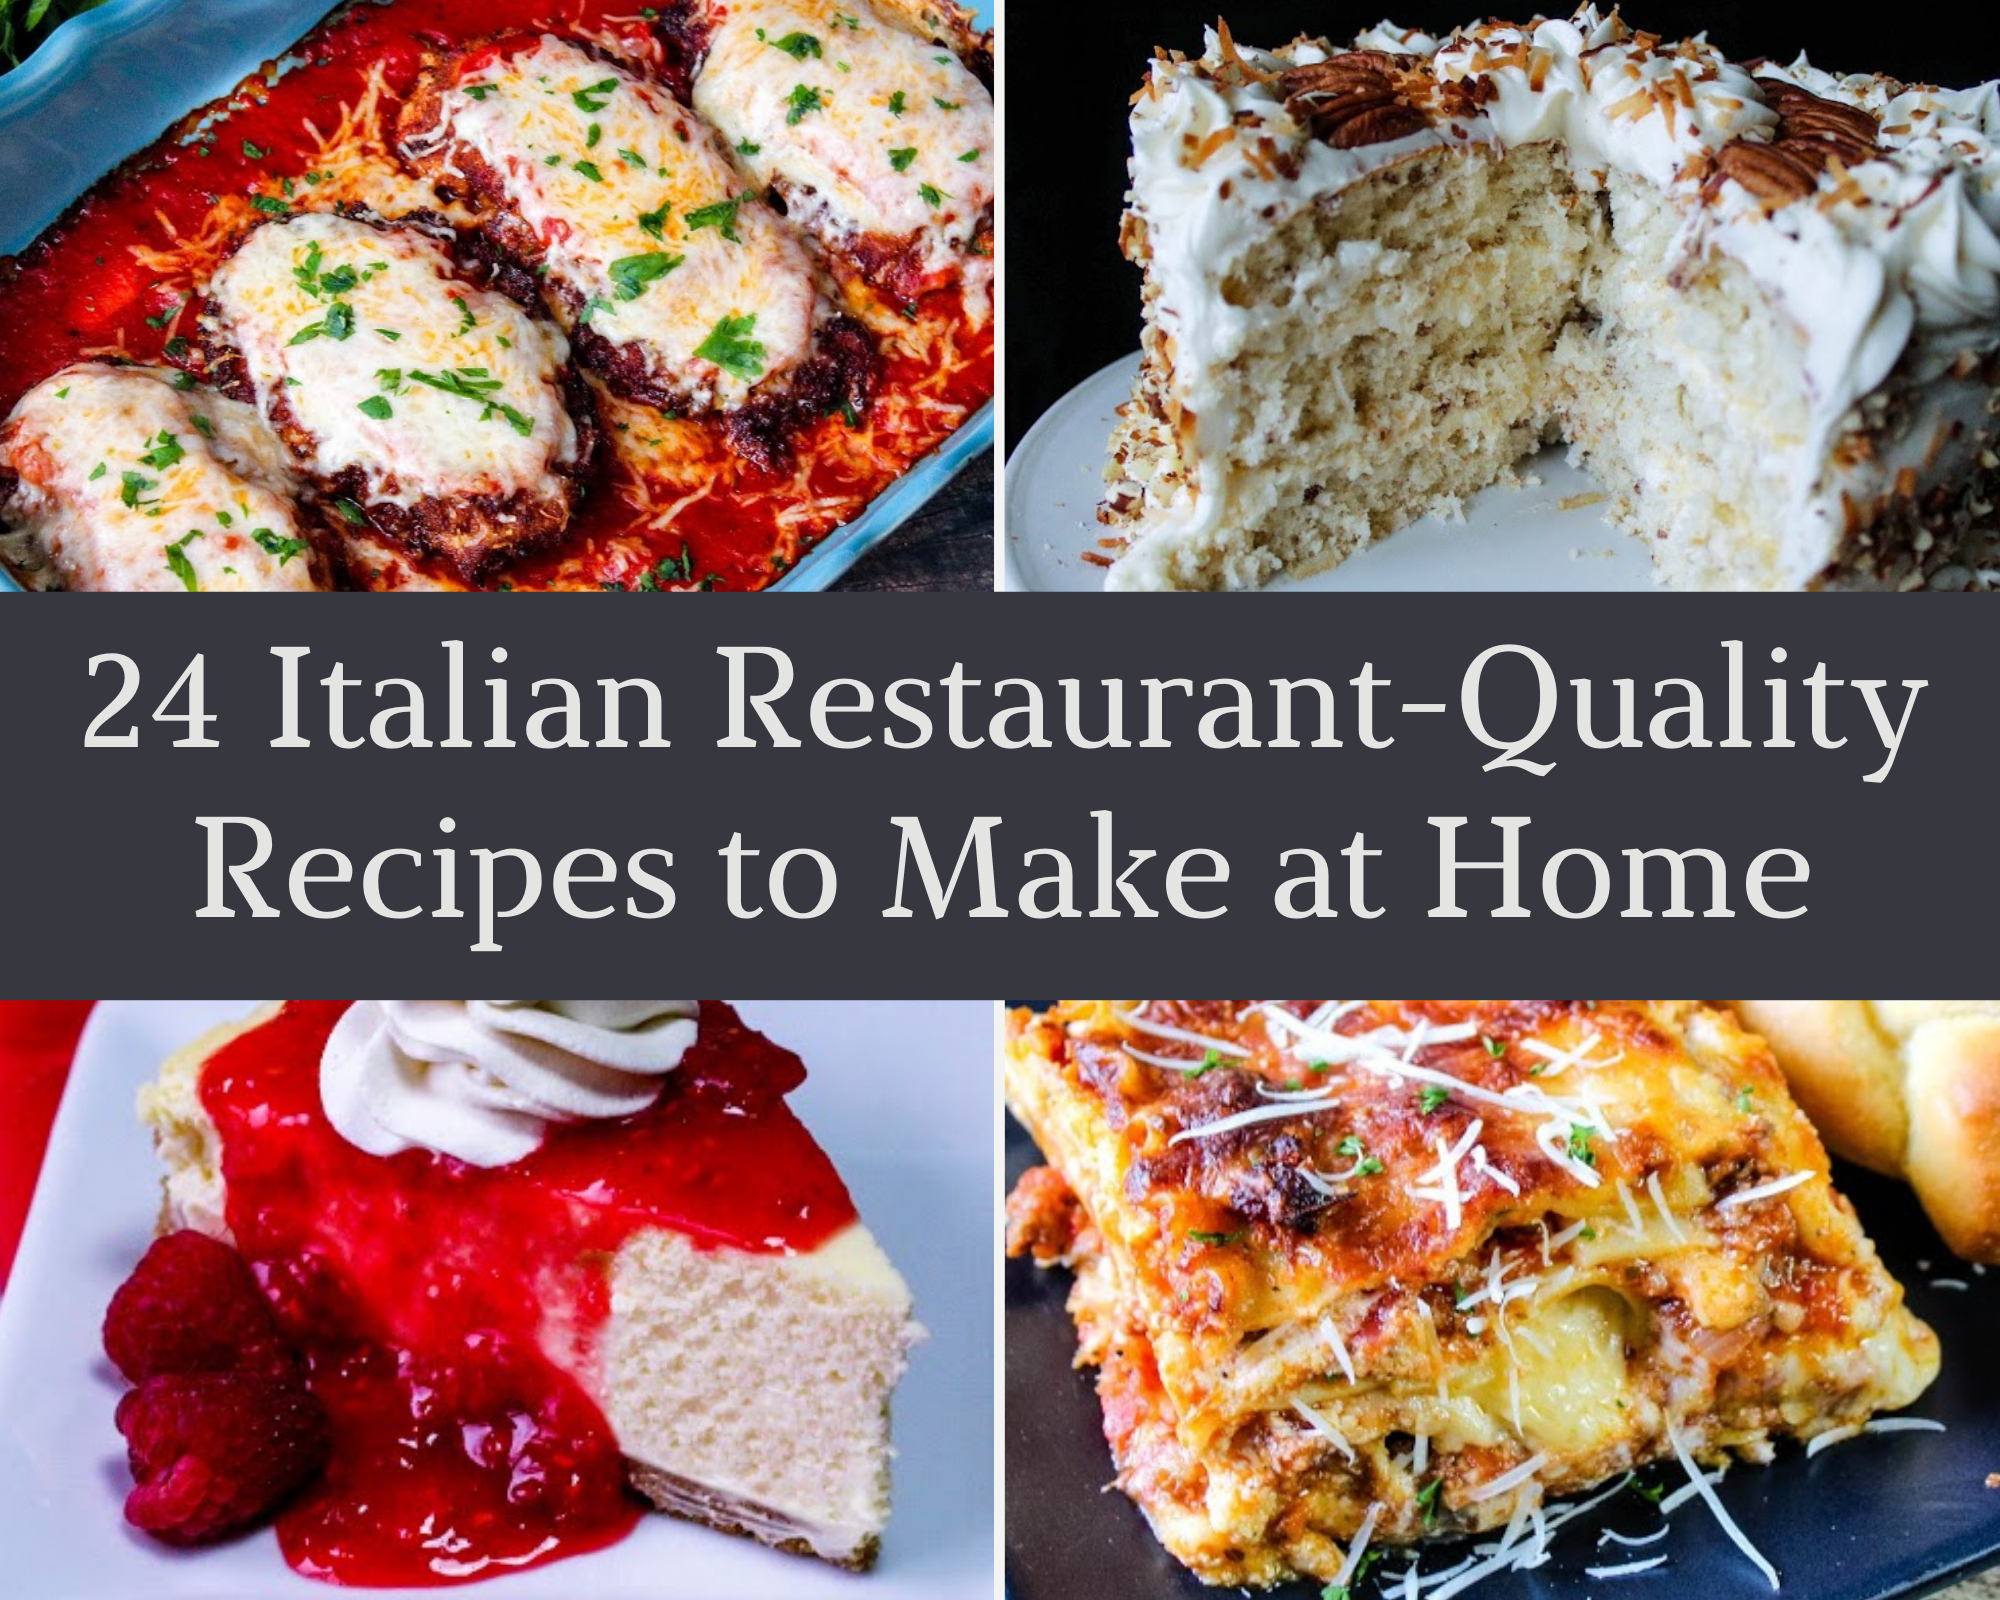 Italian recipes to make at home